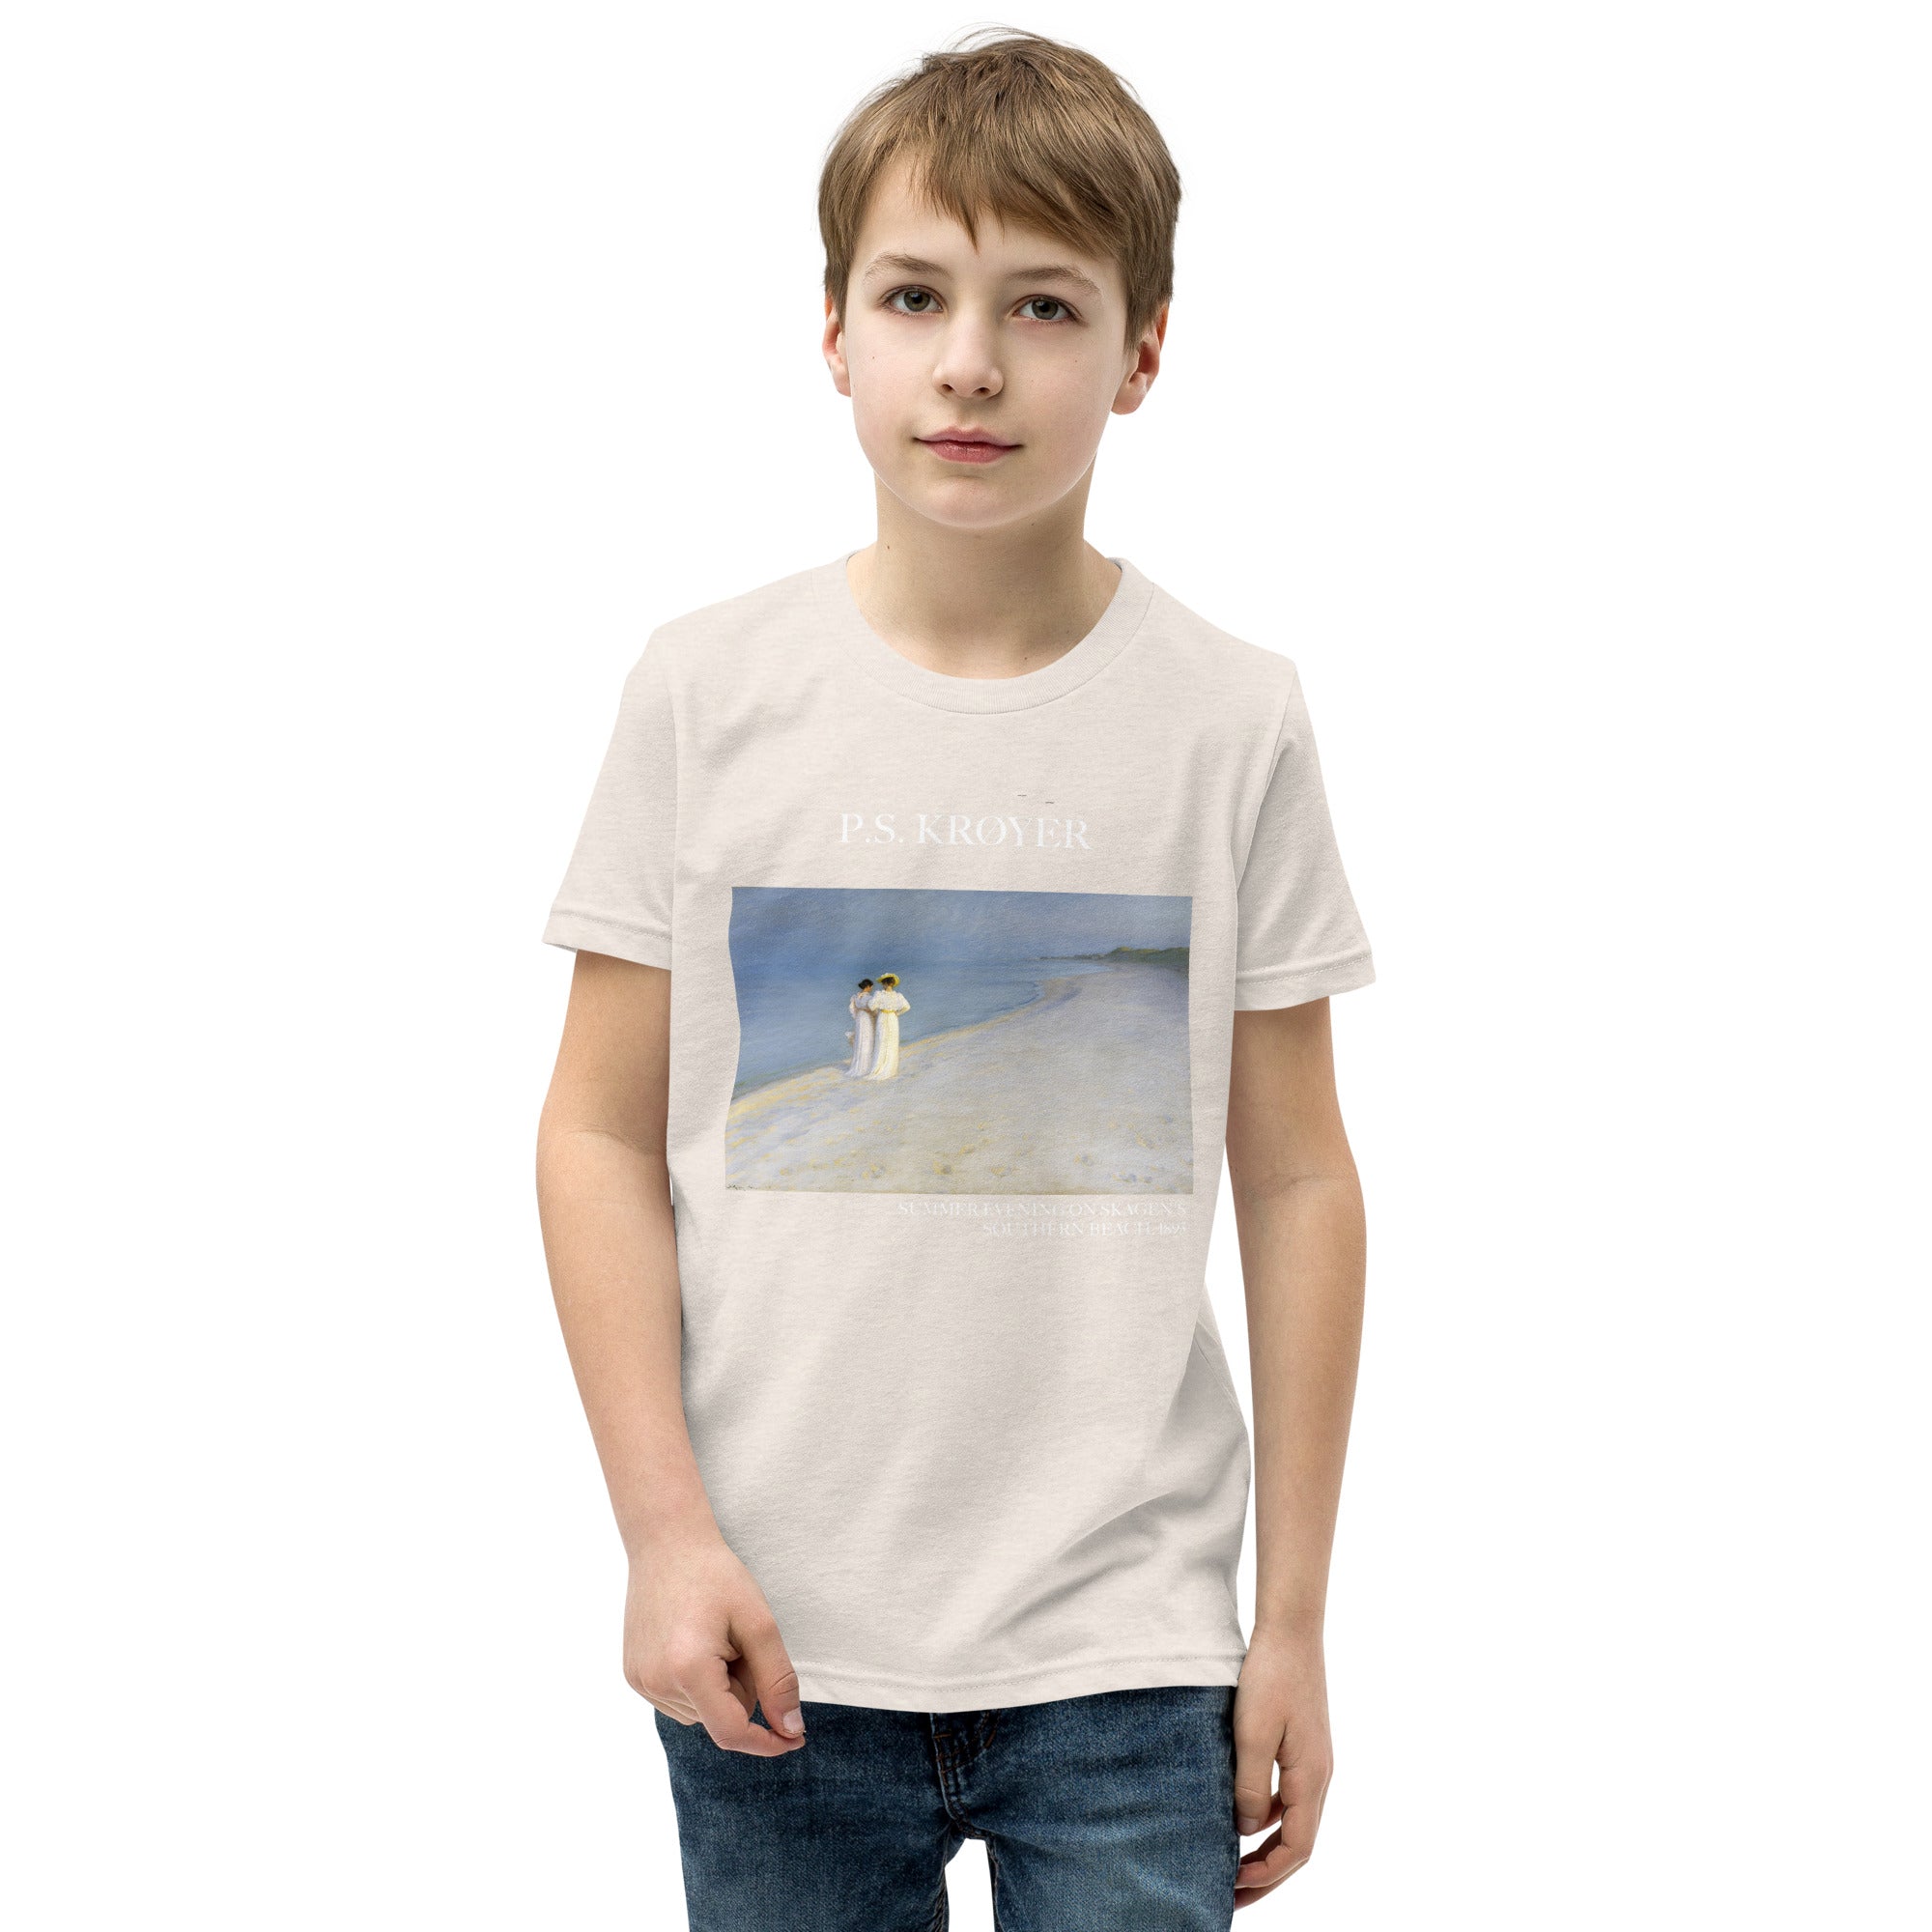 P.S. Krøyer 'Summer Evening on Skagen's Southern Beach' Famous Painting Short Sleeve T-Shirt | Premium Youth Art Tee